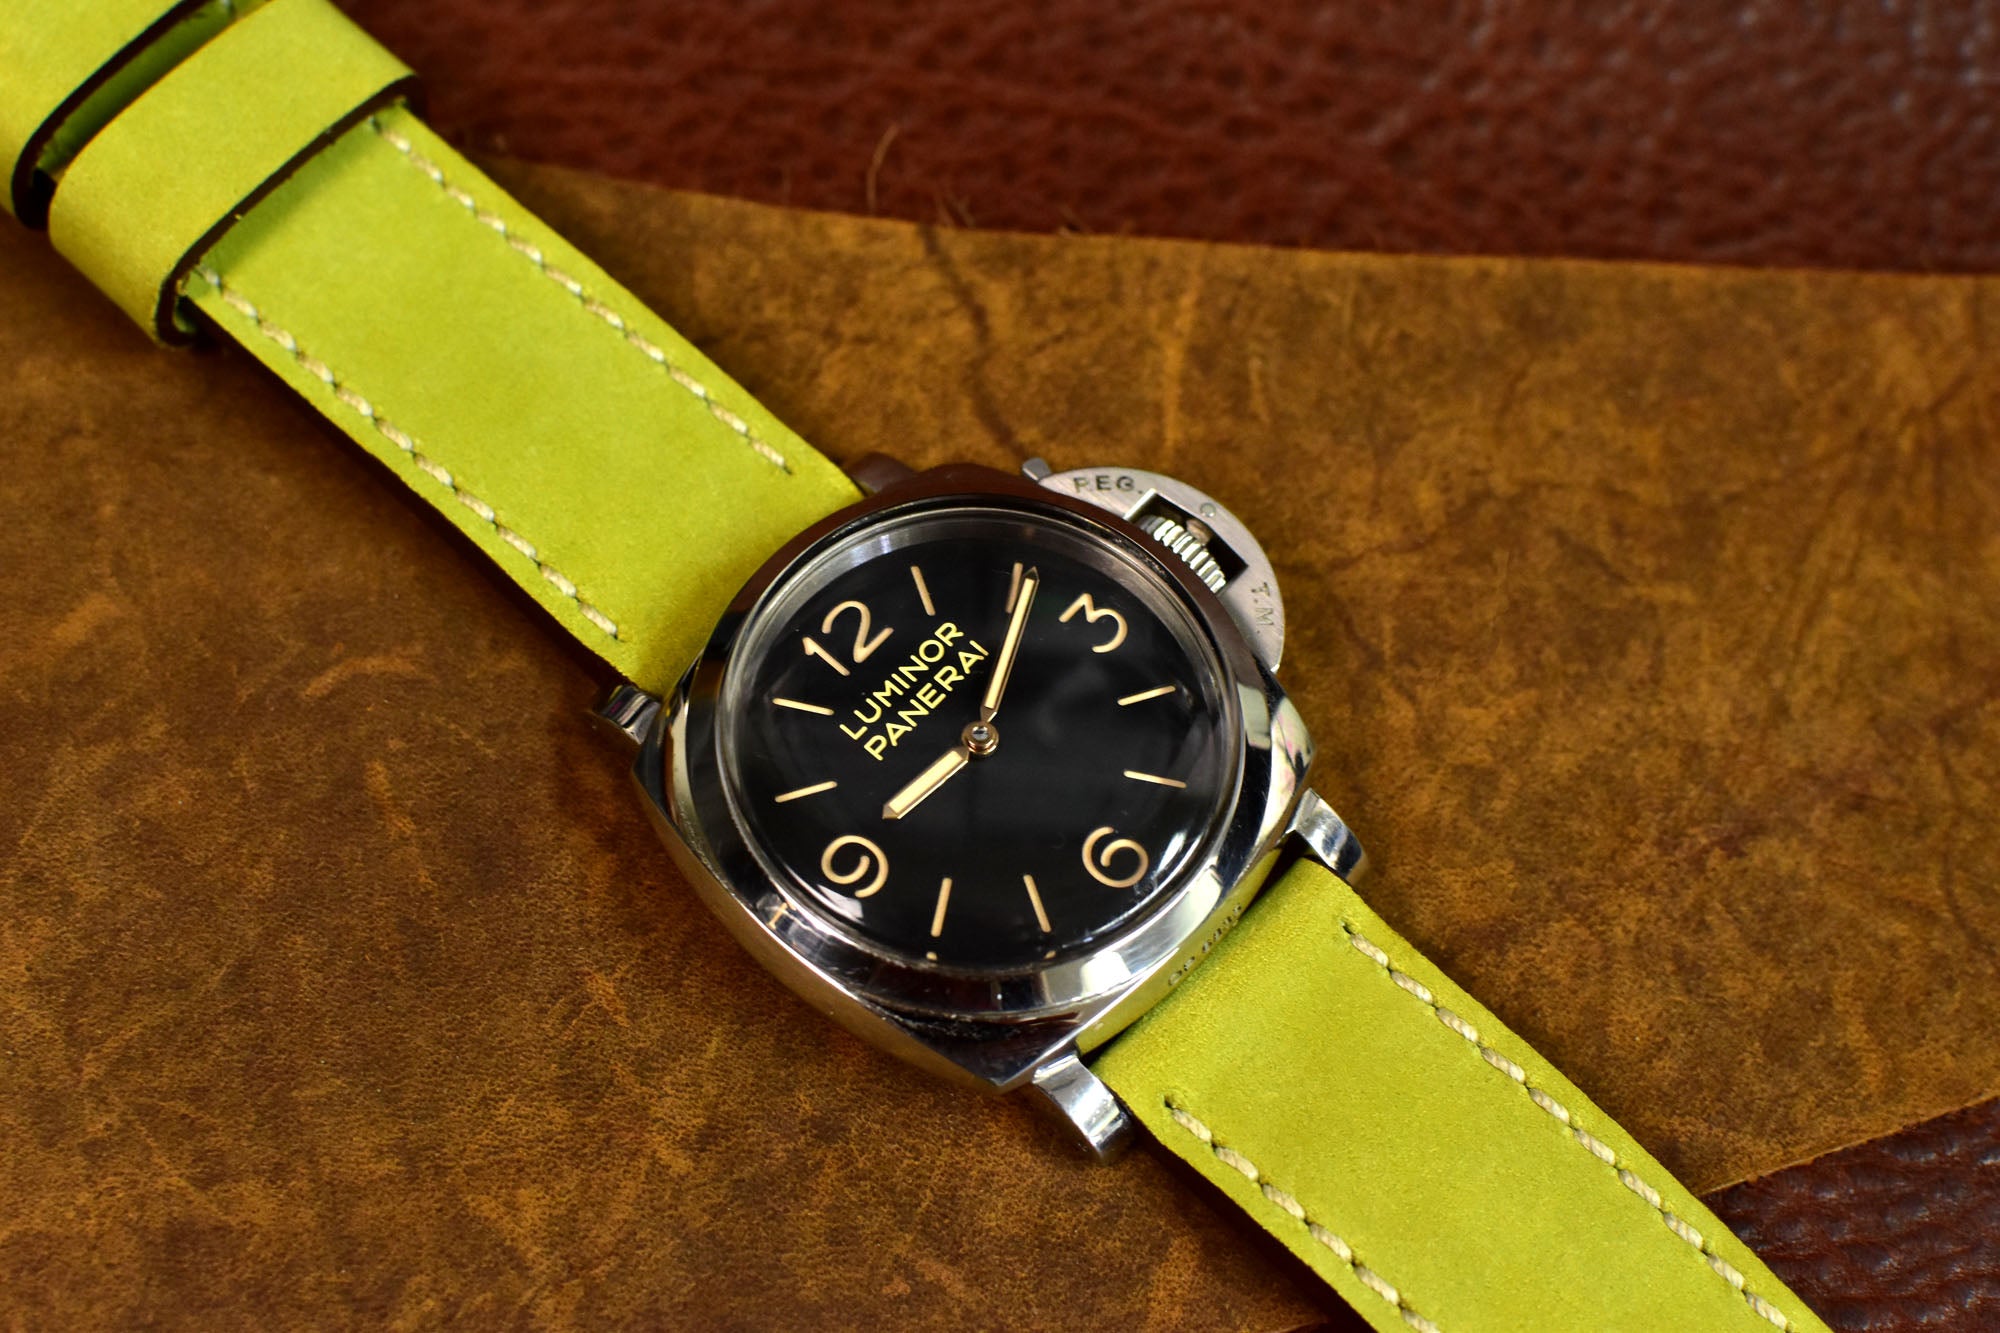 Alfalfa Leather Watch Strap, Light Green Watch Strap